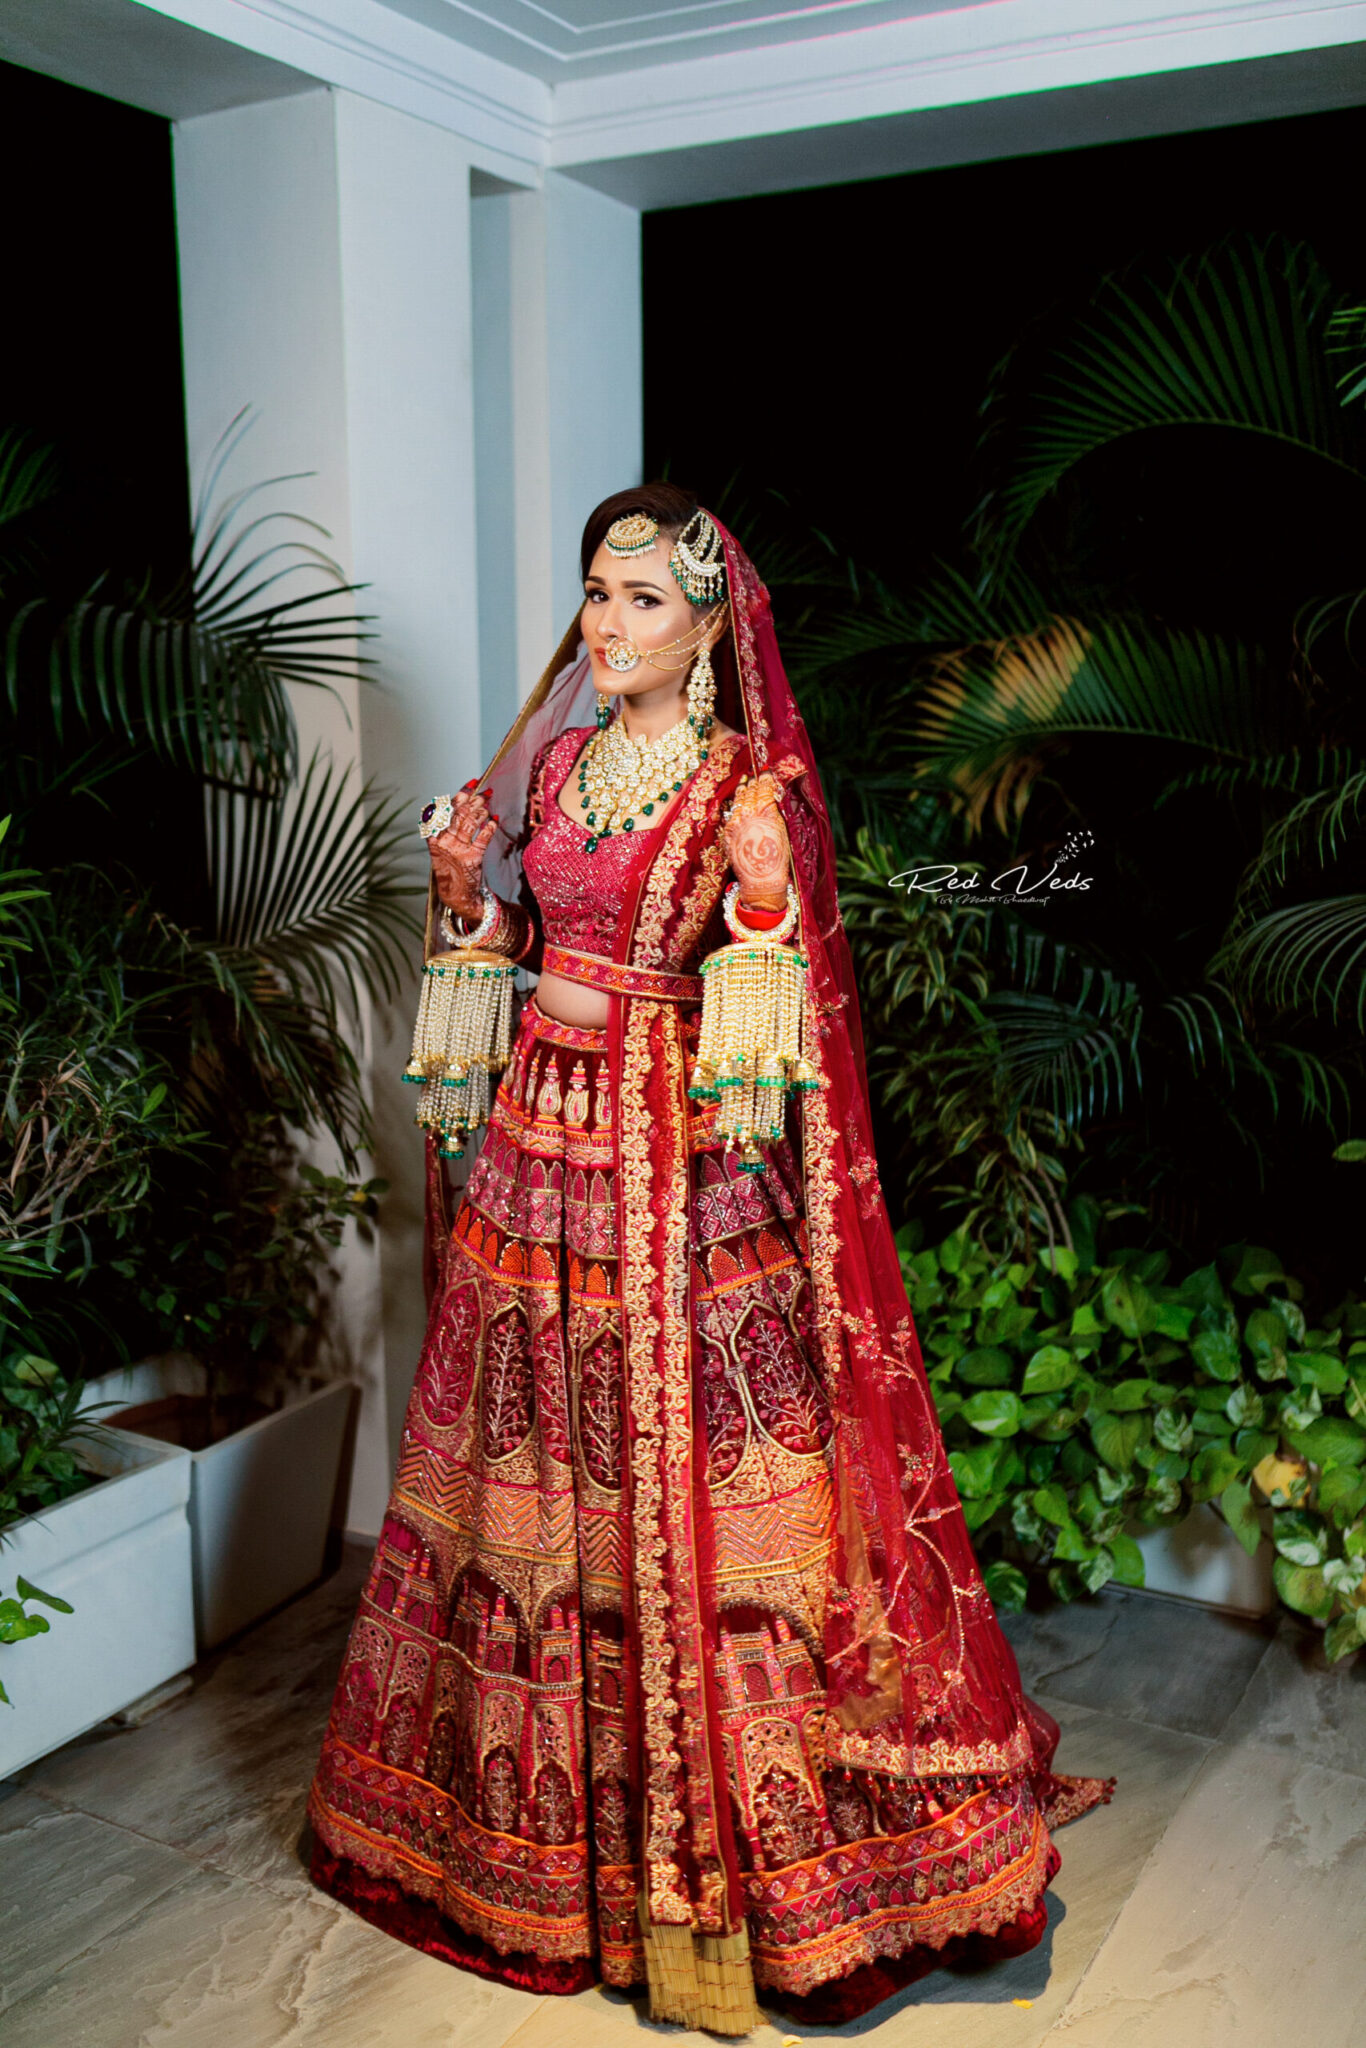 180 Girl potret ideas | bridal photography poses, indian wedding  photography poses, indian wedding photography couples